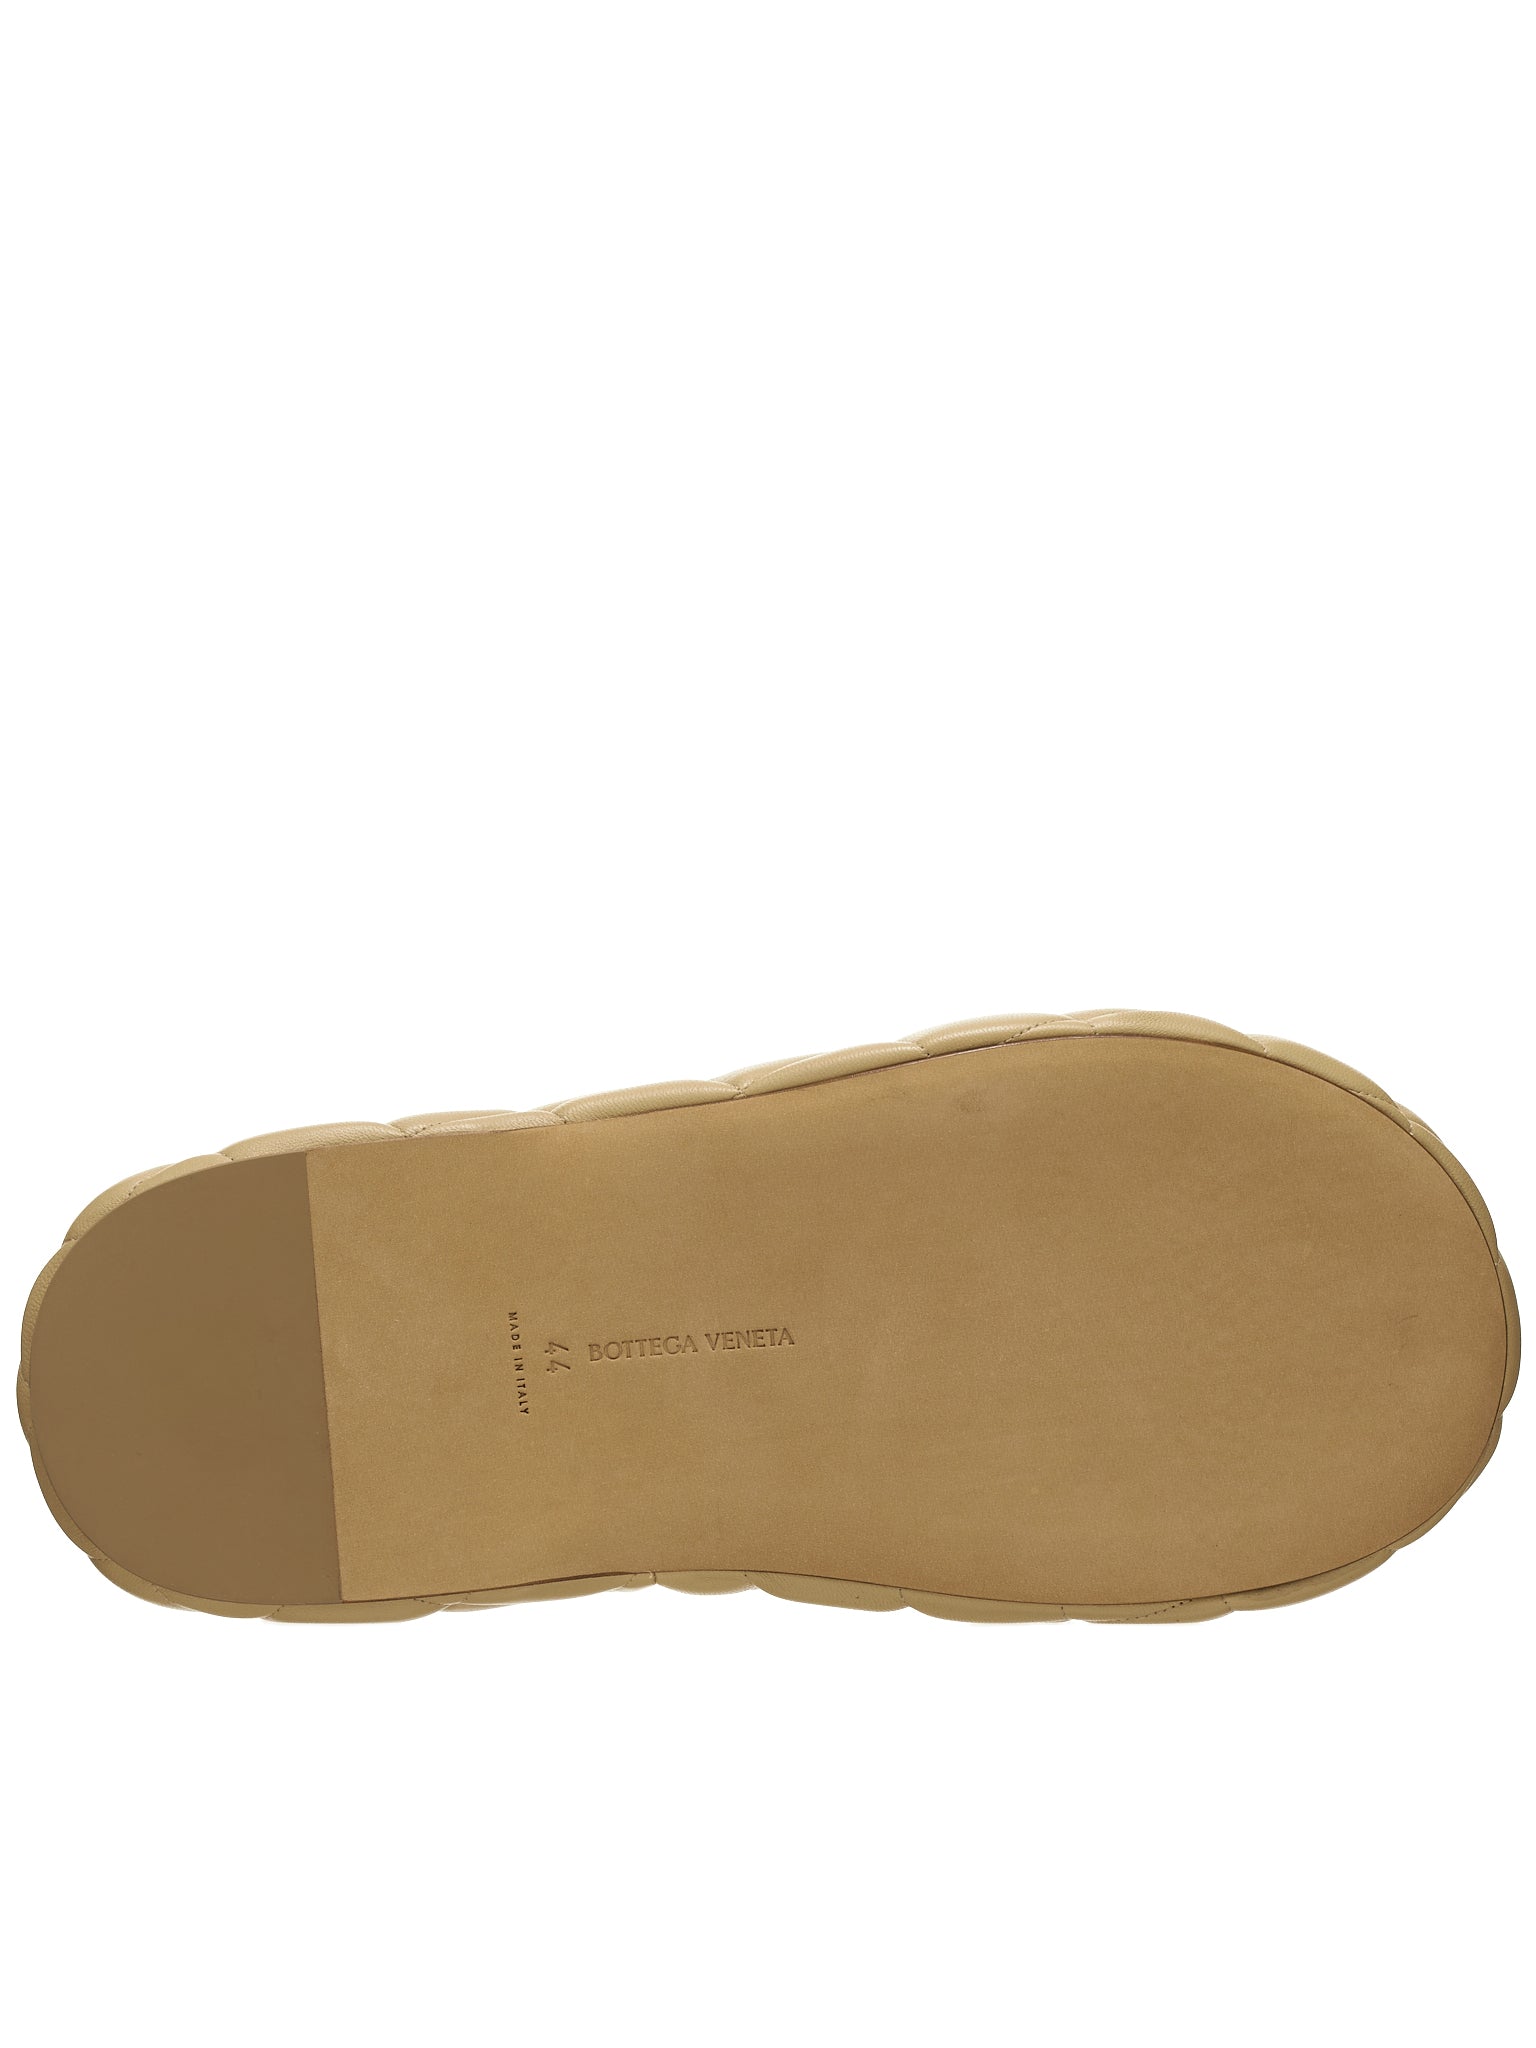 Bottega Veneta Padded Sandals | H. Lorenzo - bottom